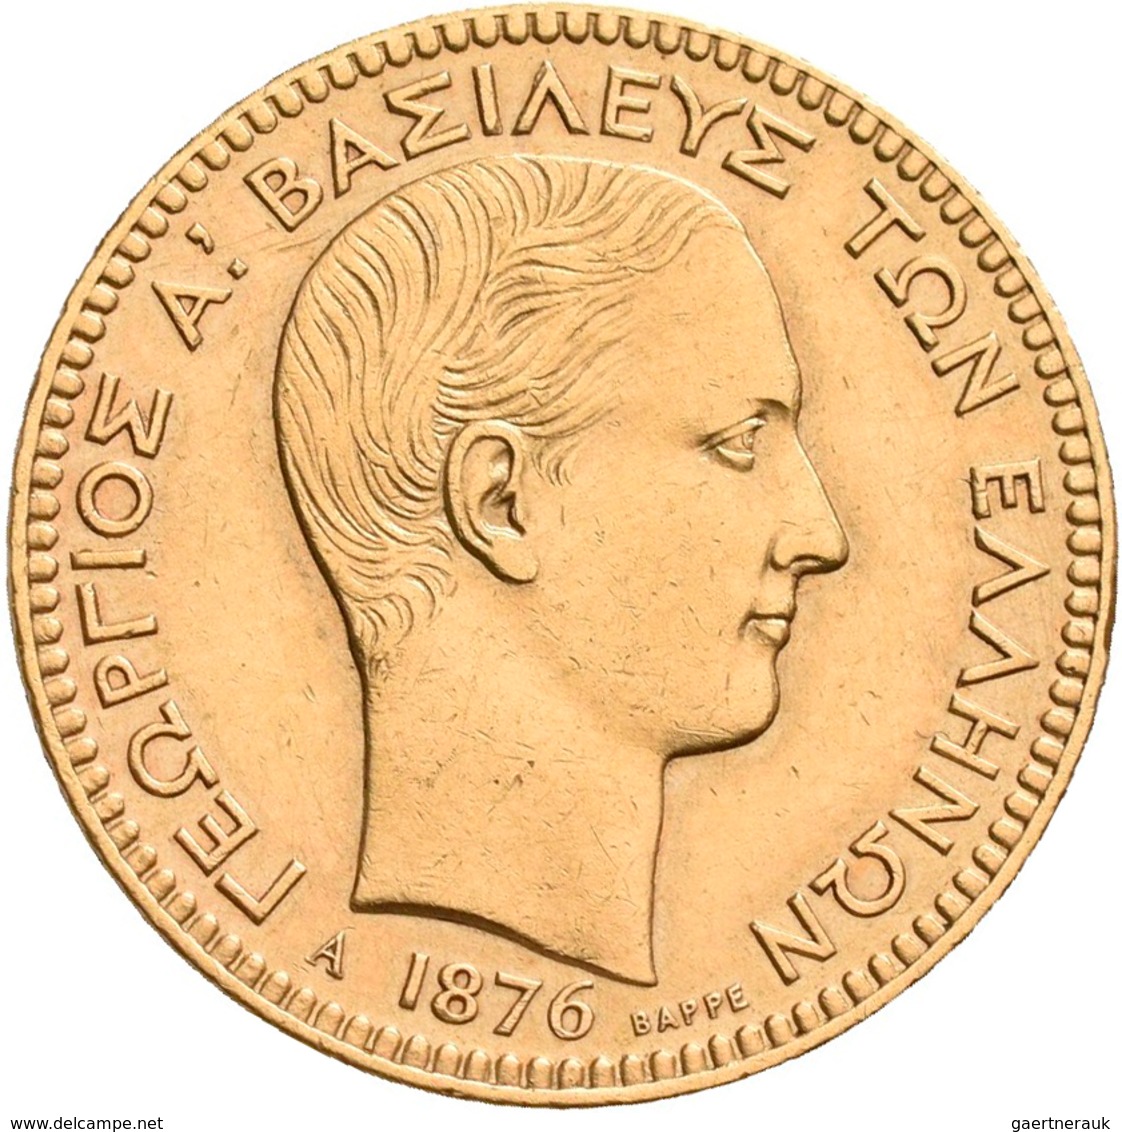 Griechenland - Anlagegold: George I. 1863-1913: 20 Drachmen 1876 A, KM# 49, Friedberg 15. 6,42 G, 90 - Greece